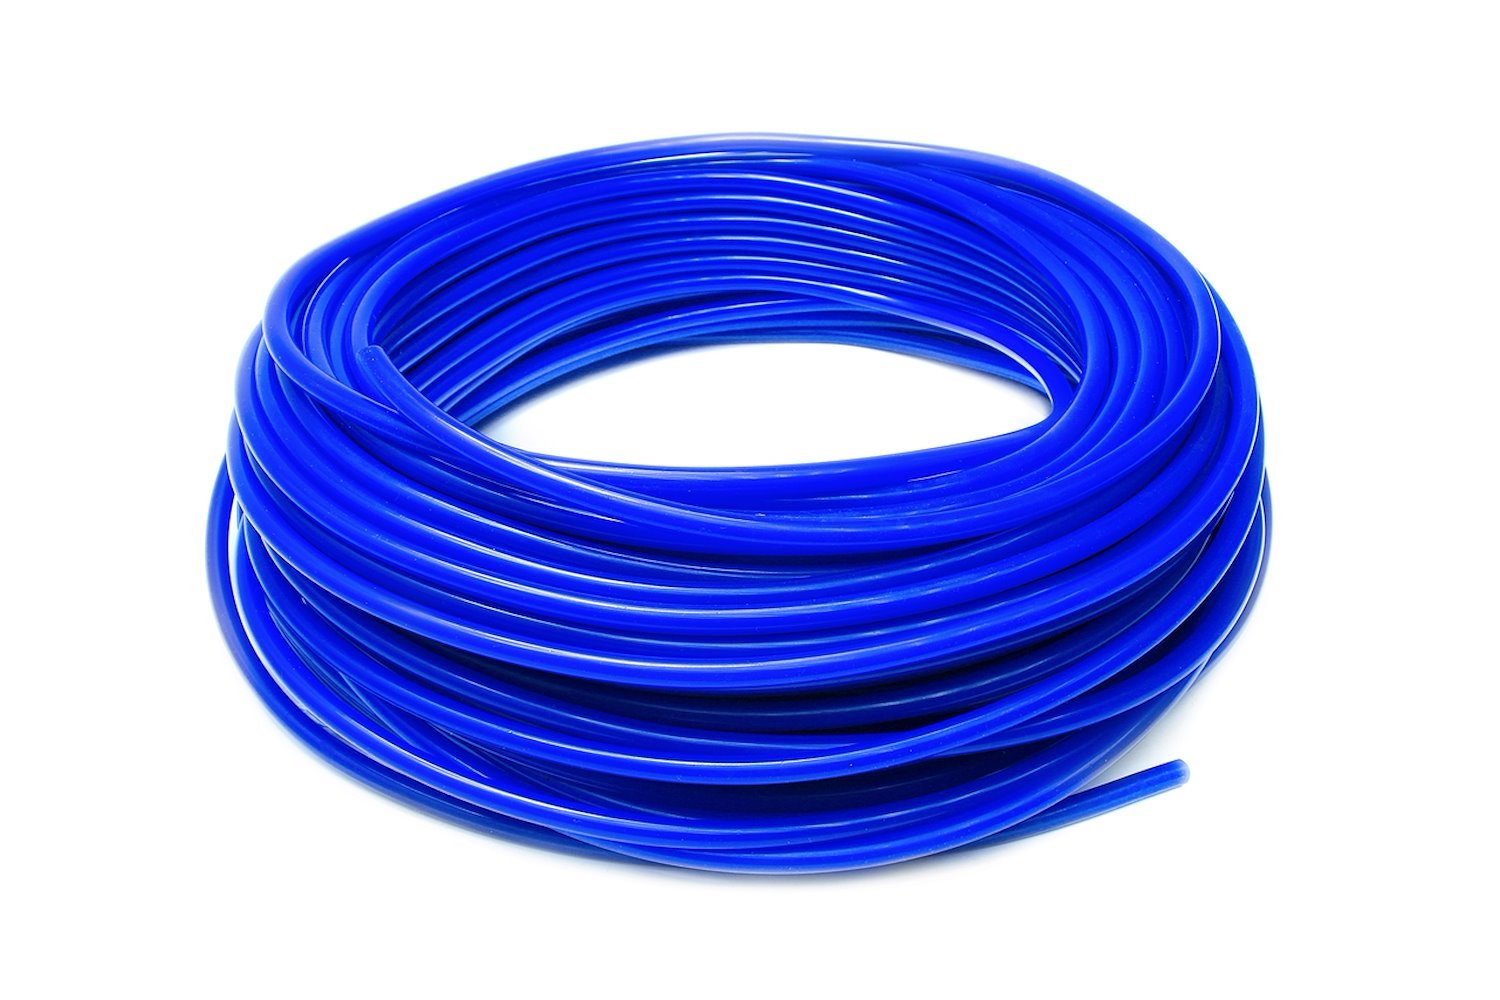 HTSVH2-BLUEx100 High-Temperature Silicone Vacuum Hose Tubing, 5/64 in. ID, 100 ft. Roll, Blue